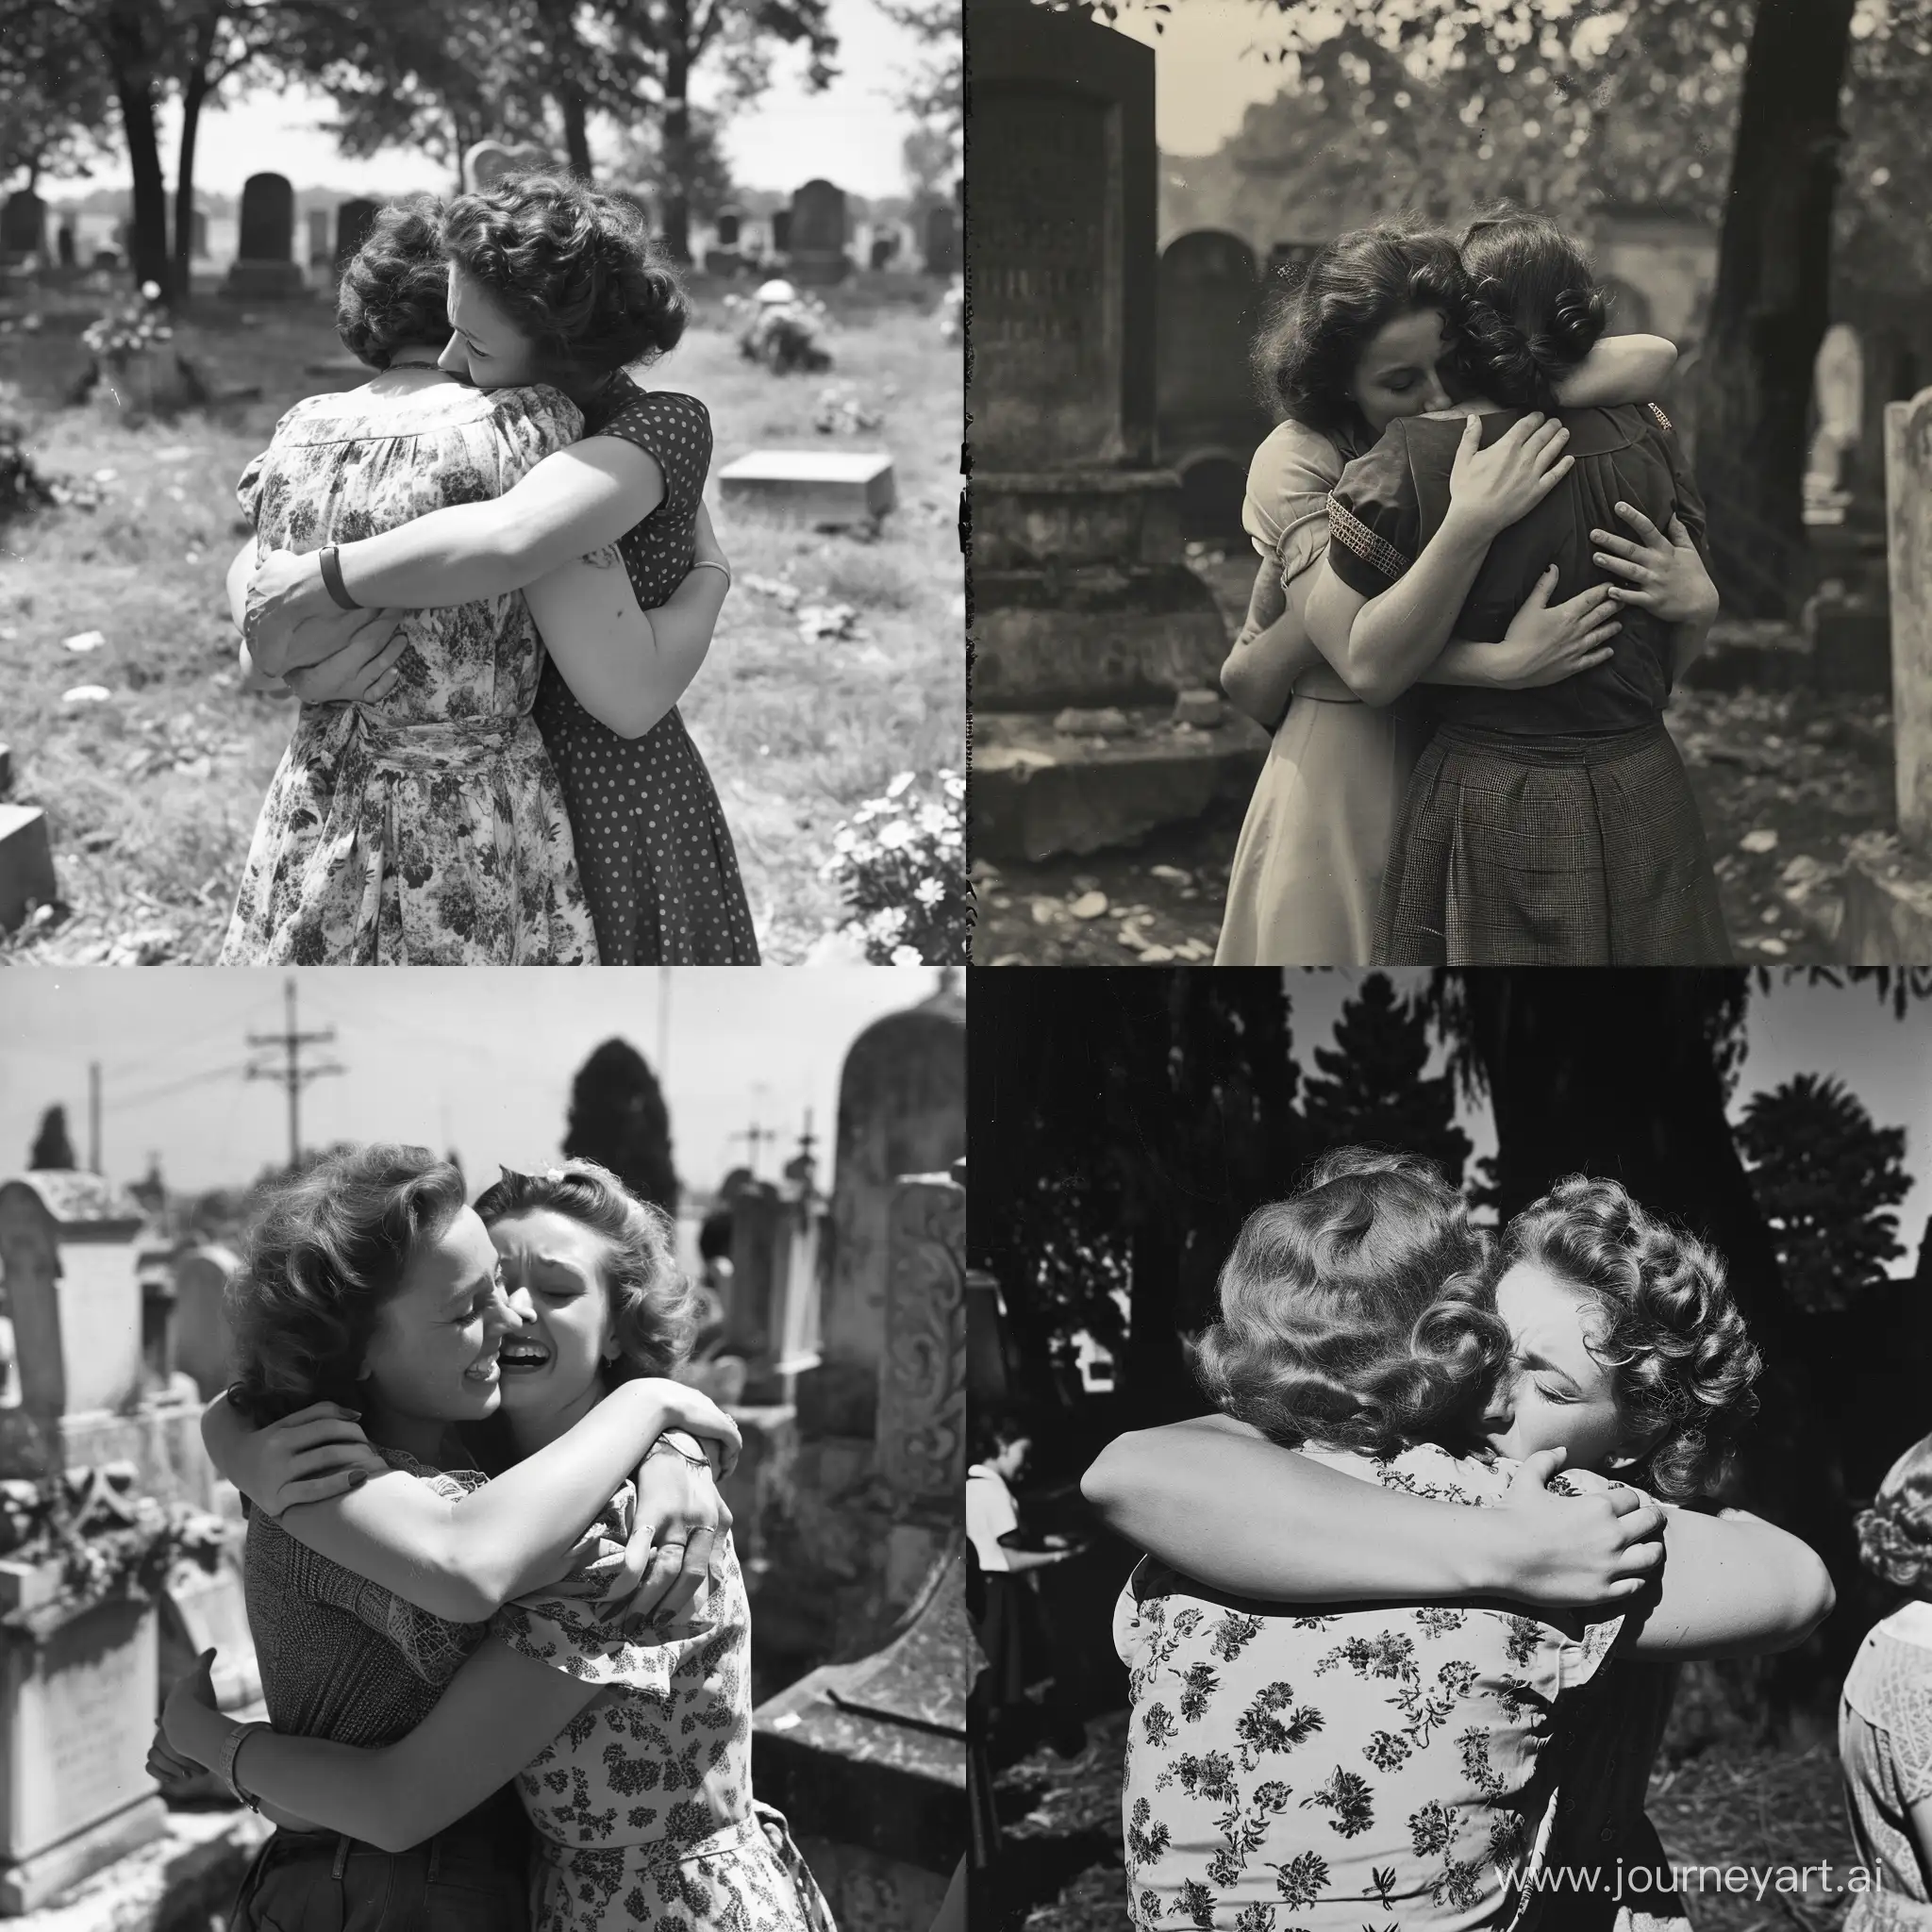 Lesbian-European-French-1950s-Photo-Emotional-Cemetery-Hug